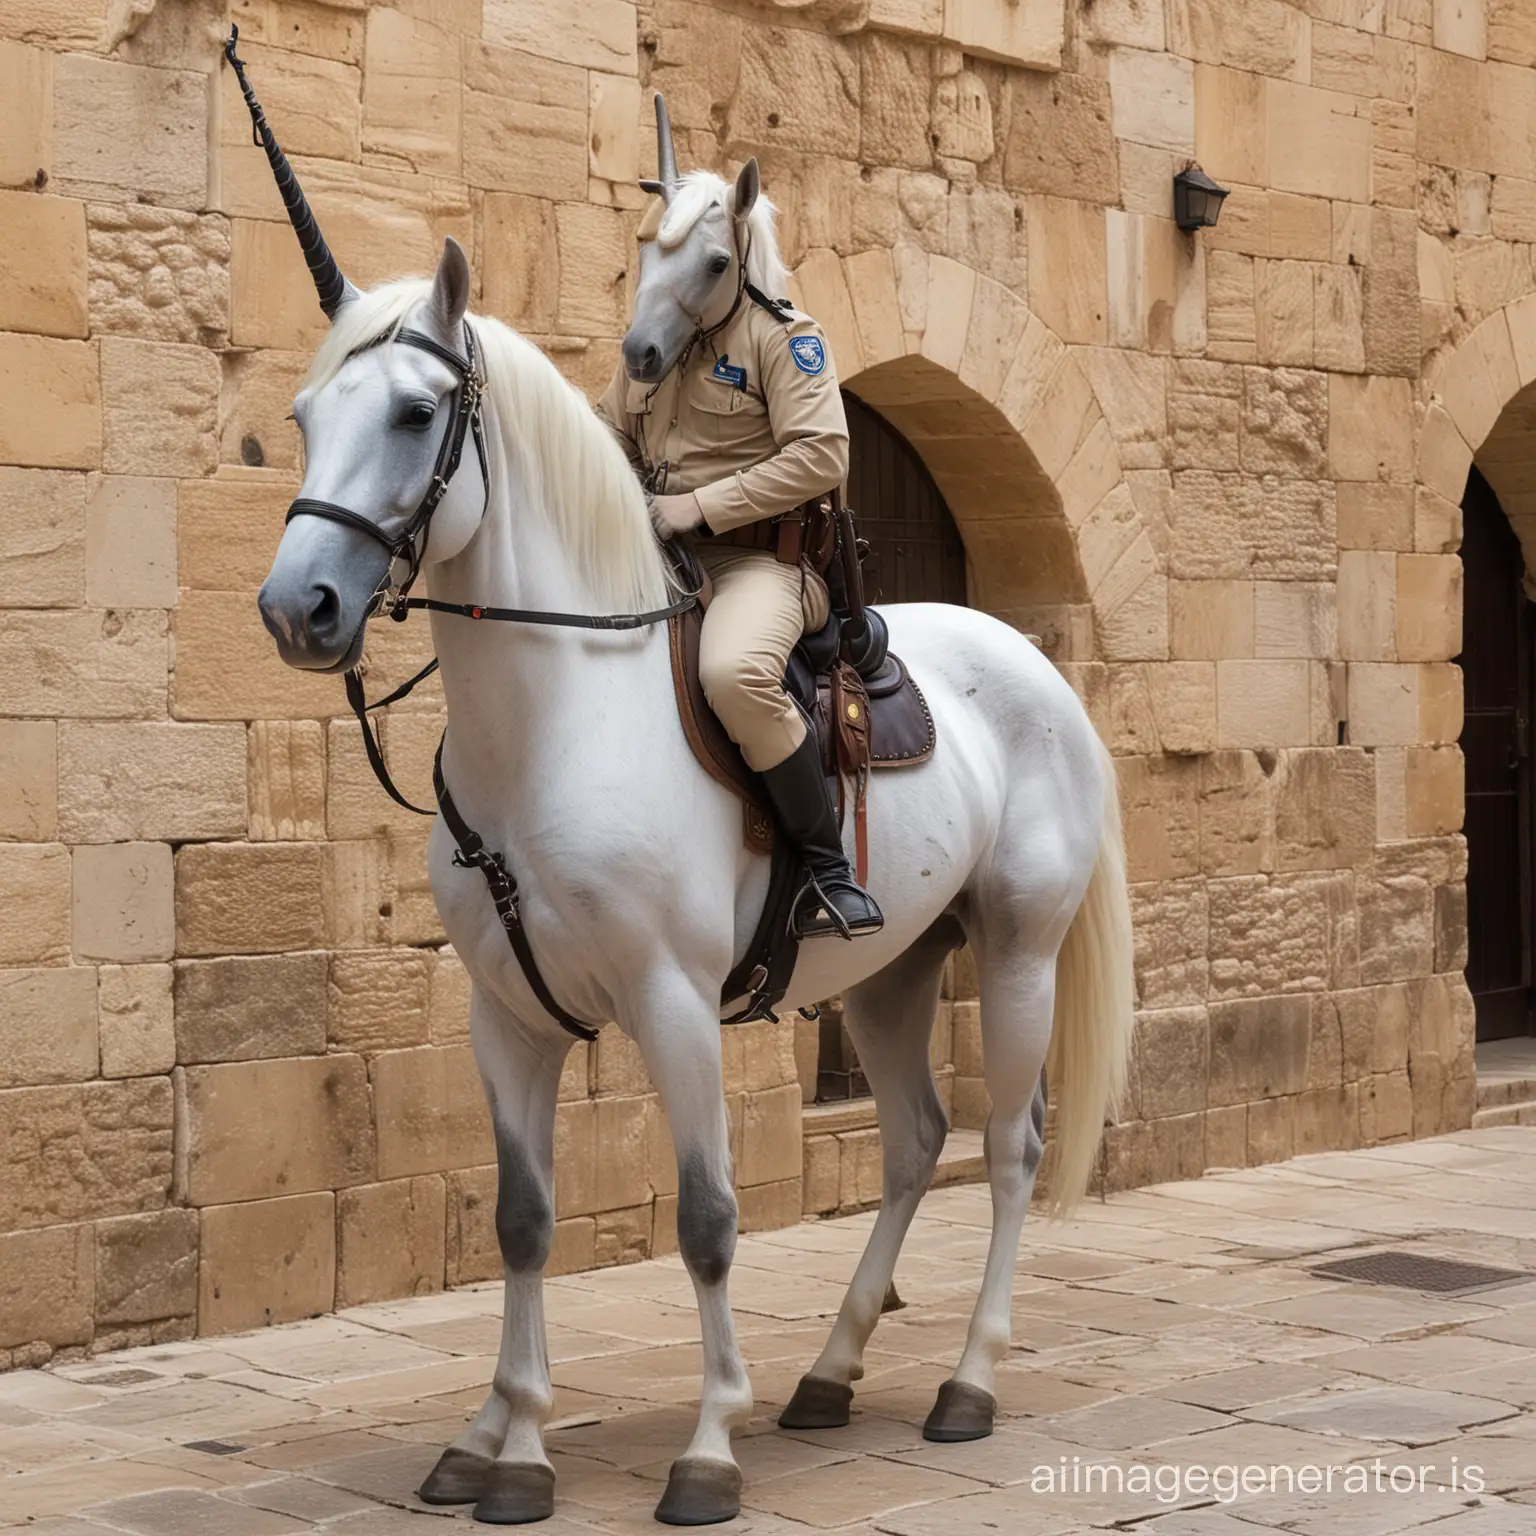 Israeli-Policeman-Riding-Unicorn-in-the-Old-City-of-Jerusalem